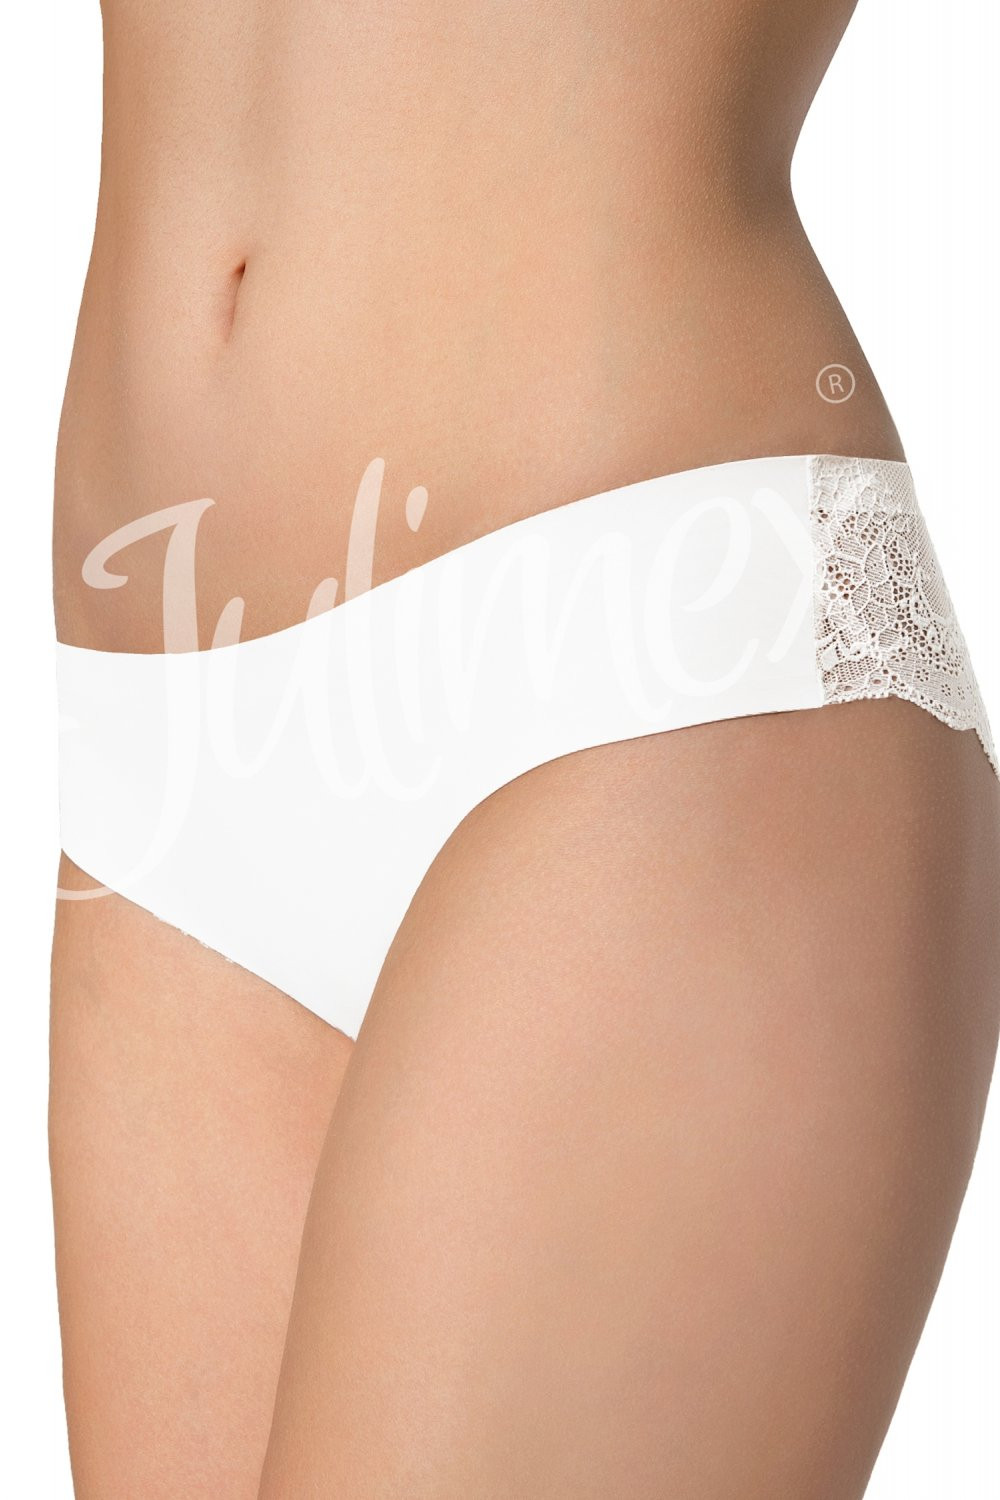 Dámské kalhotky Tanga white - JULIMEX Bílá XL